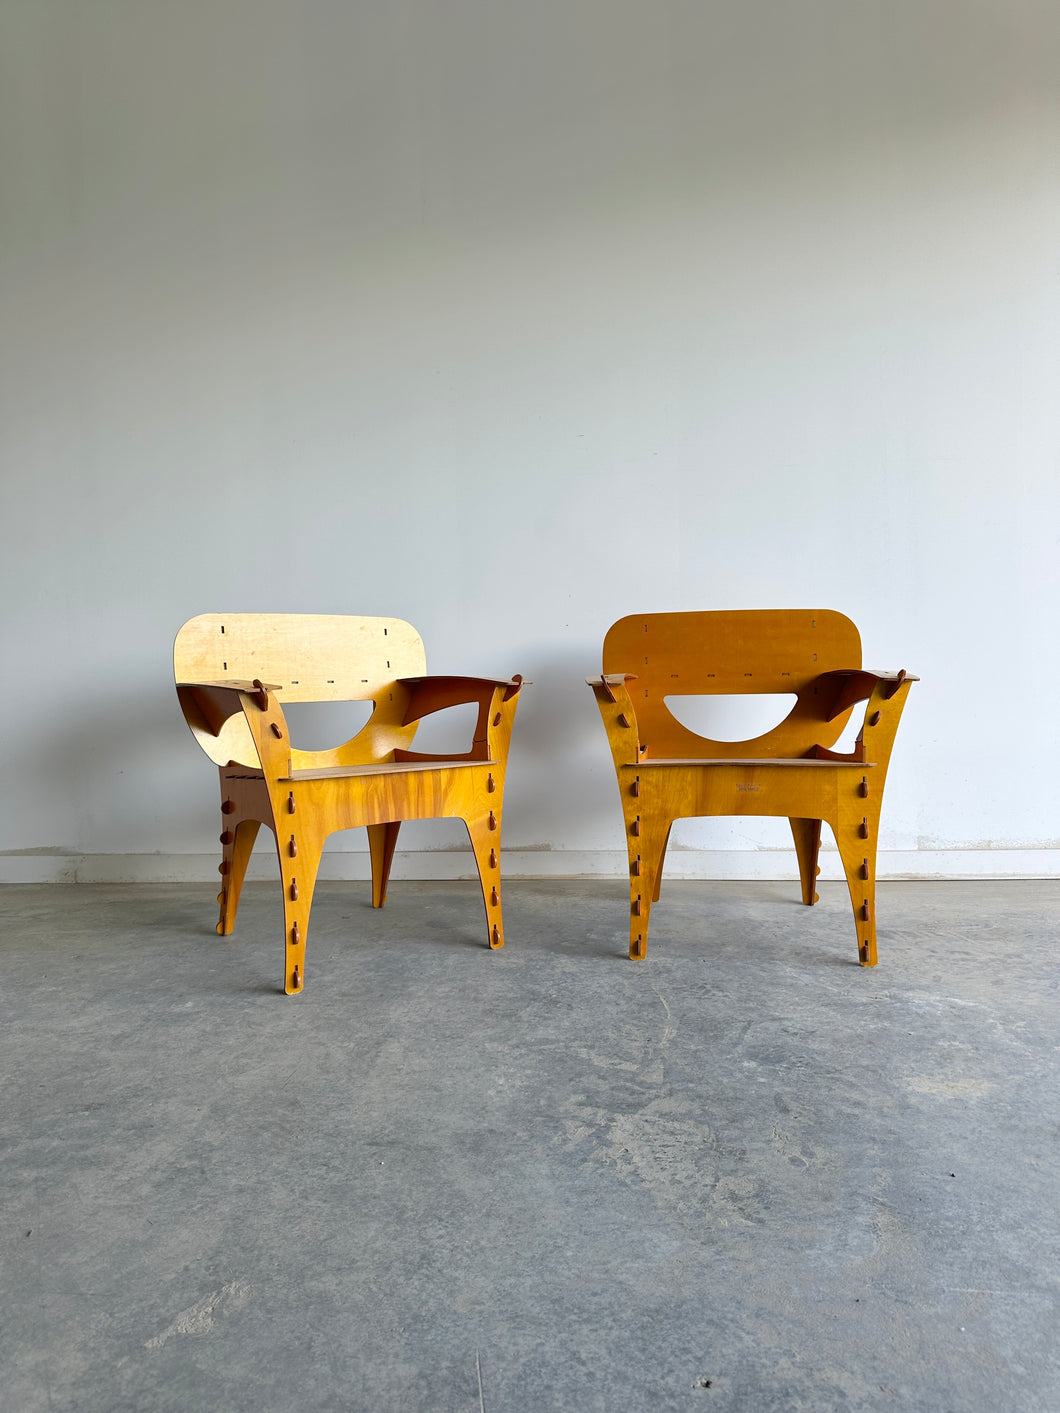 Sculptural plywood Puzzle chairs by David Kawecki